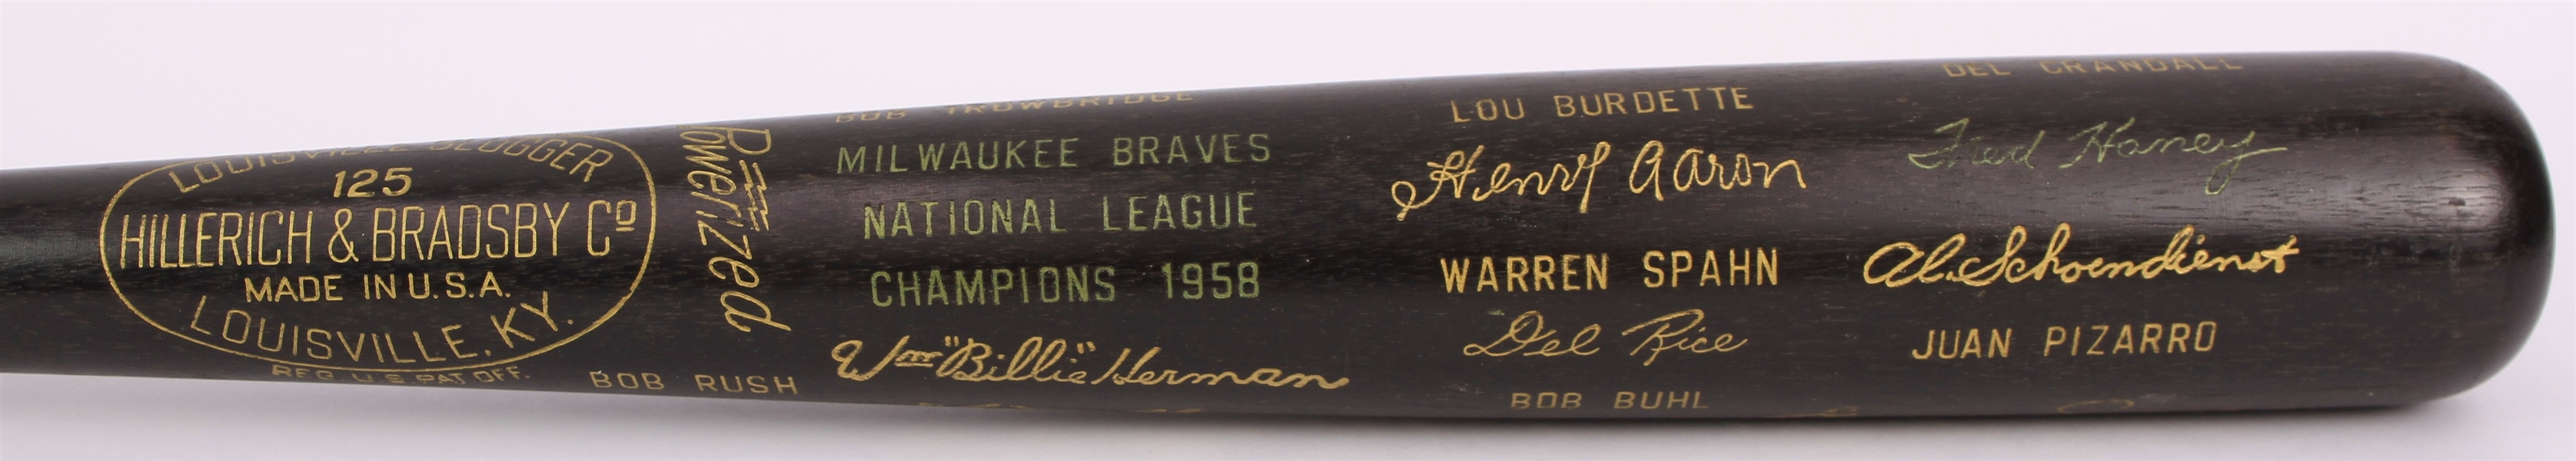 1958 Milwaukee Braves National League Champions H&B Louisville Slugger Commemorative Black Bat